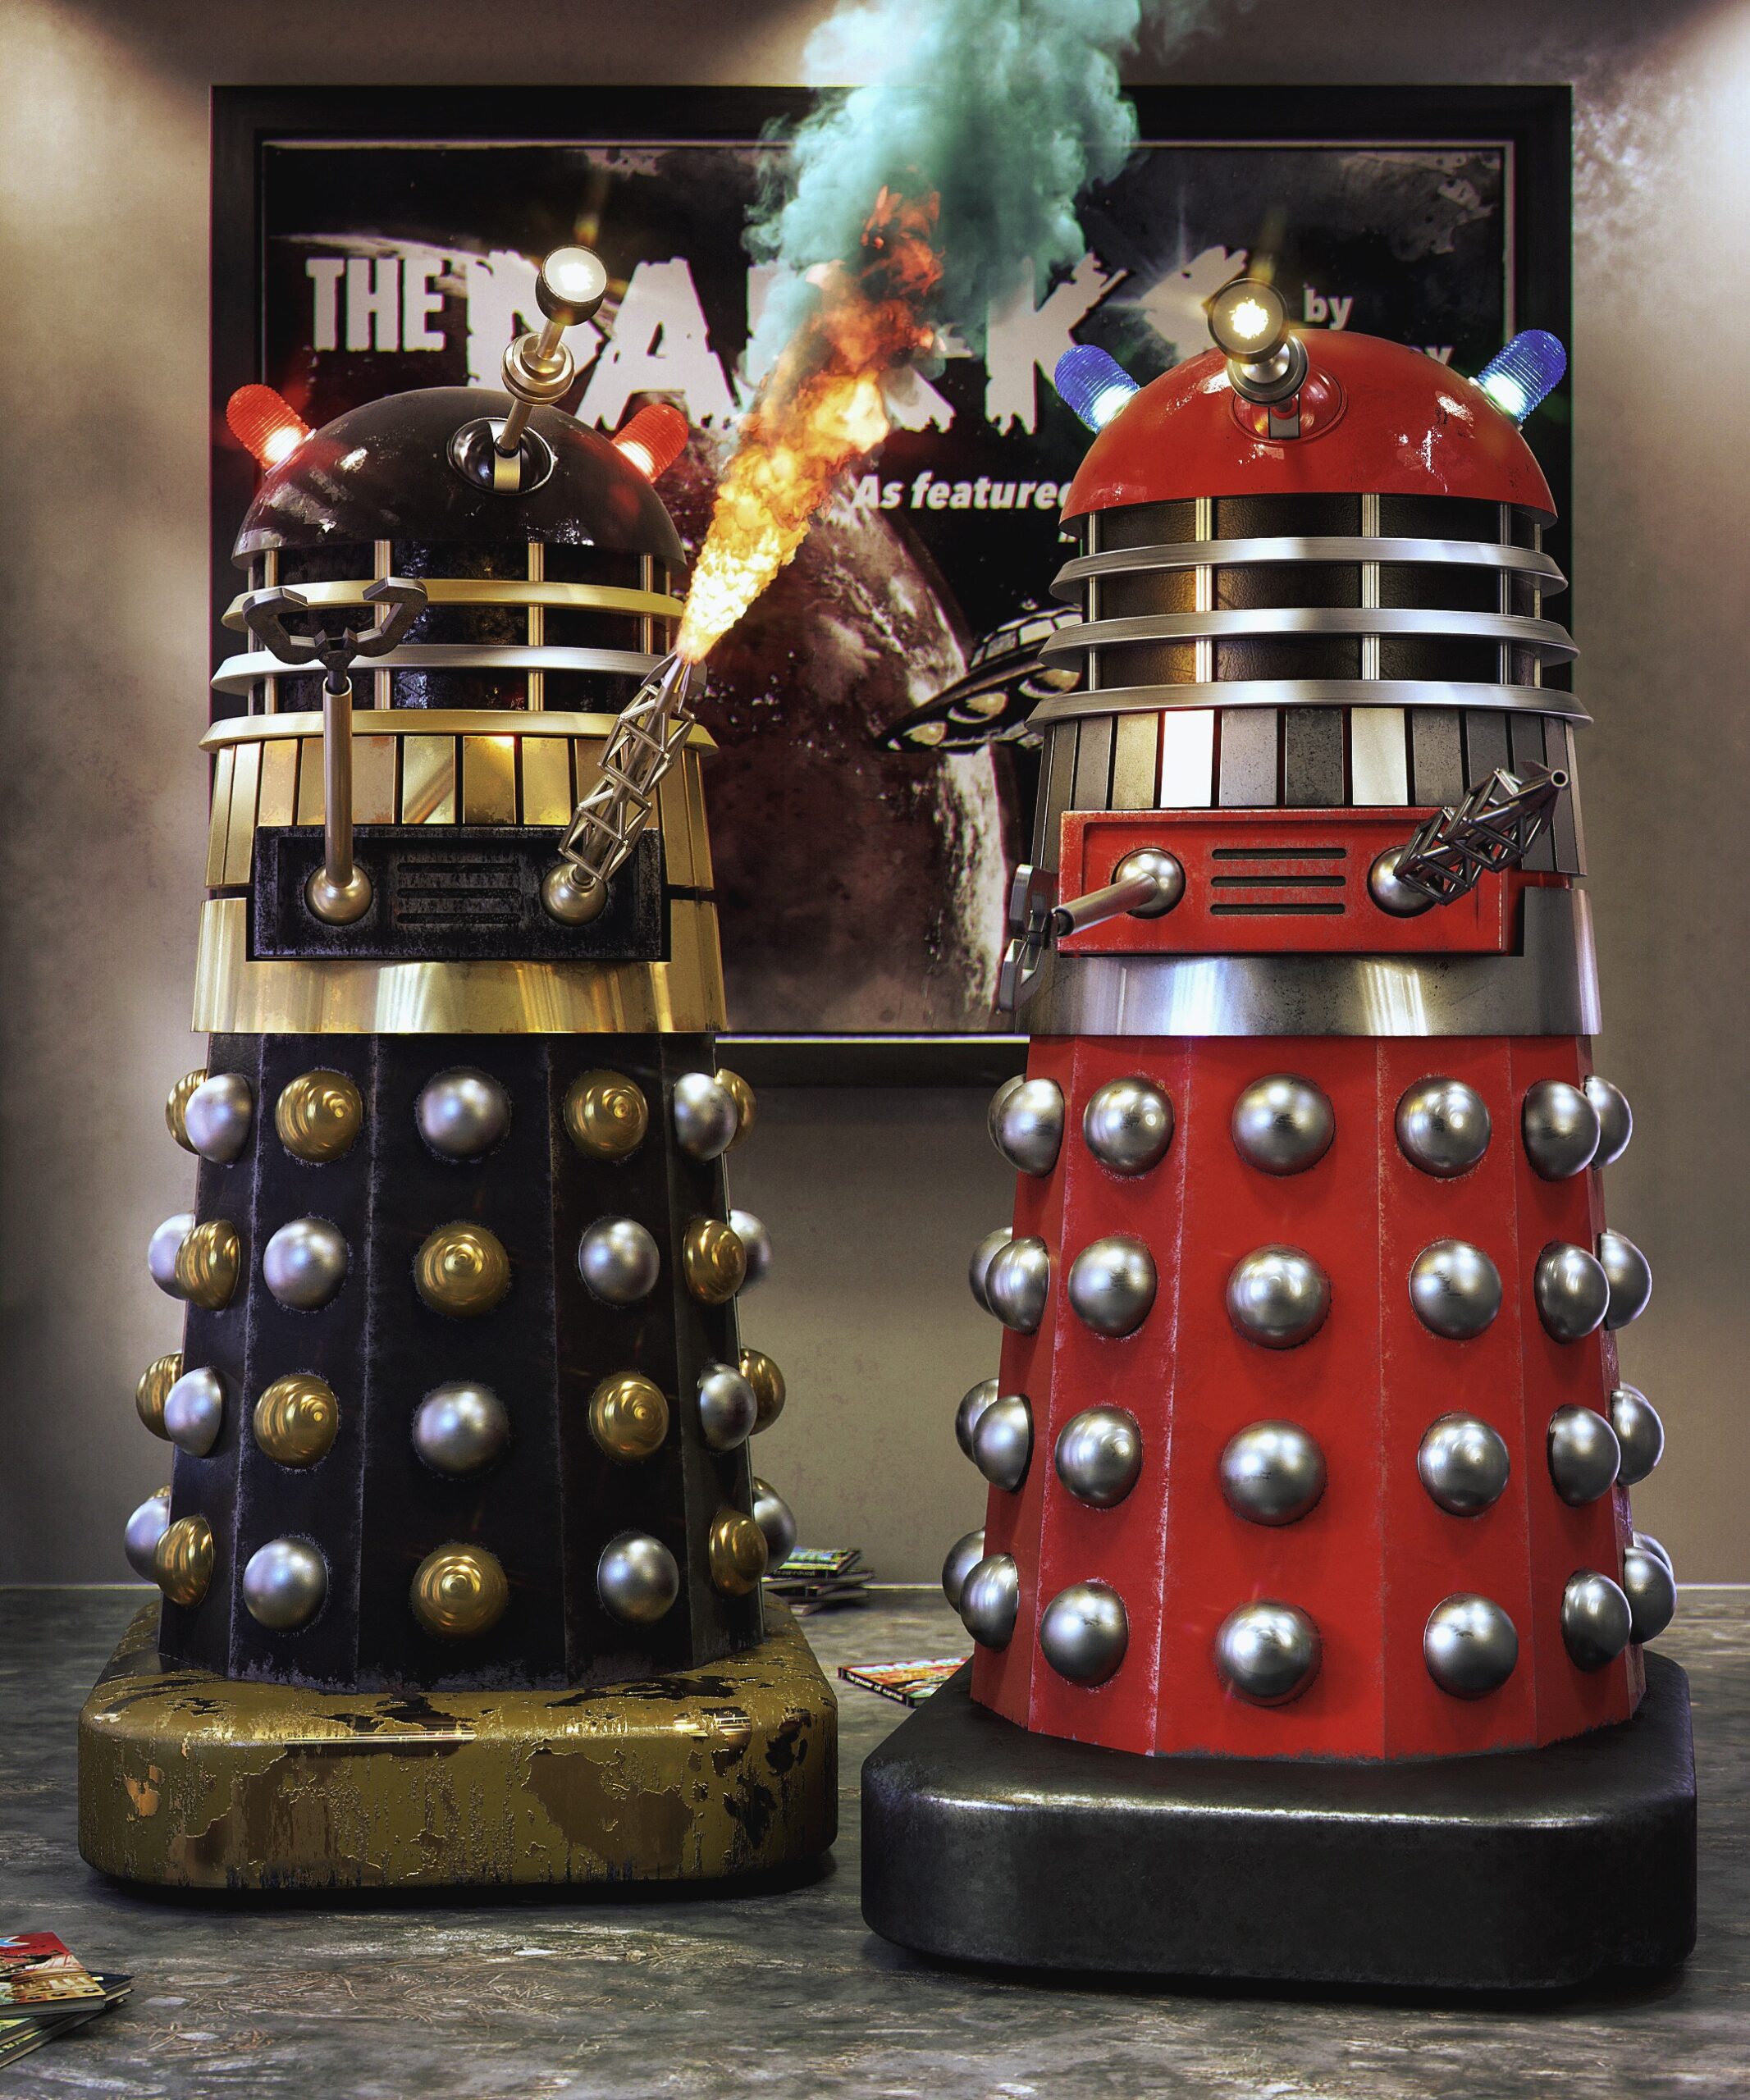 TV21 Square Comic Daleks by Phil Shaw